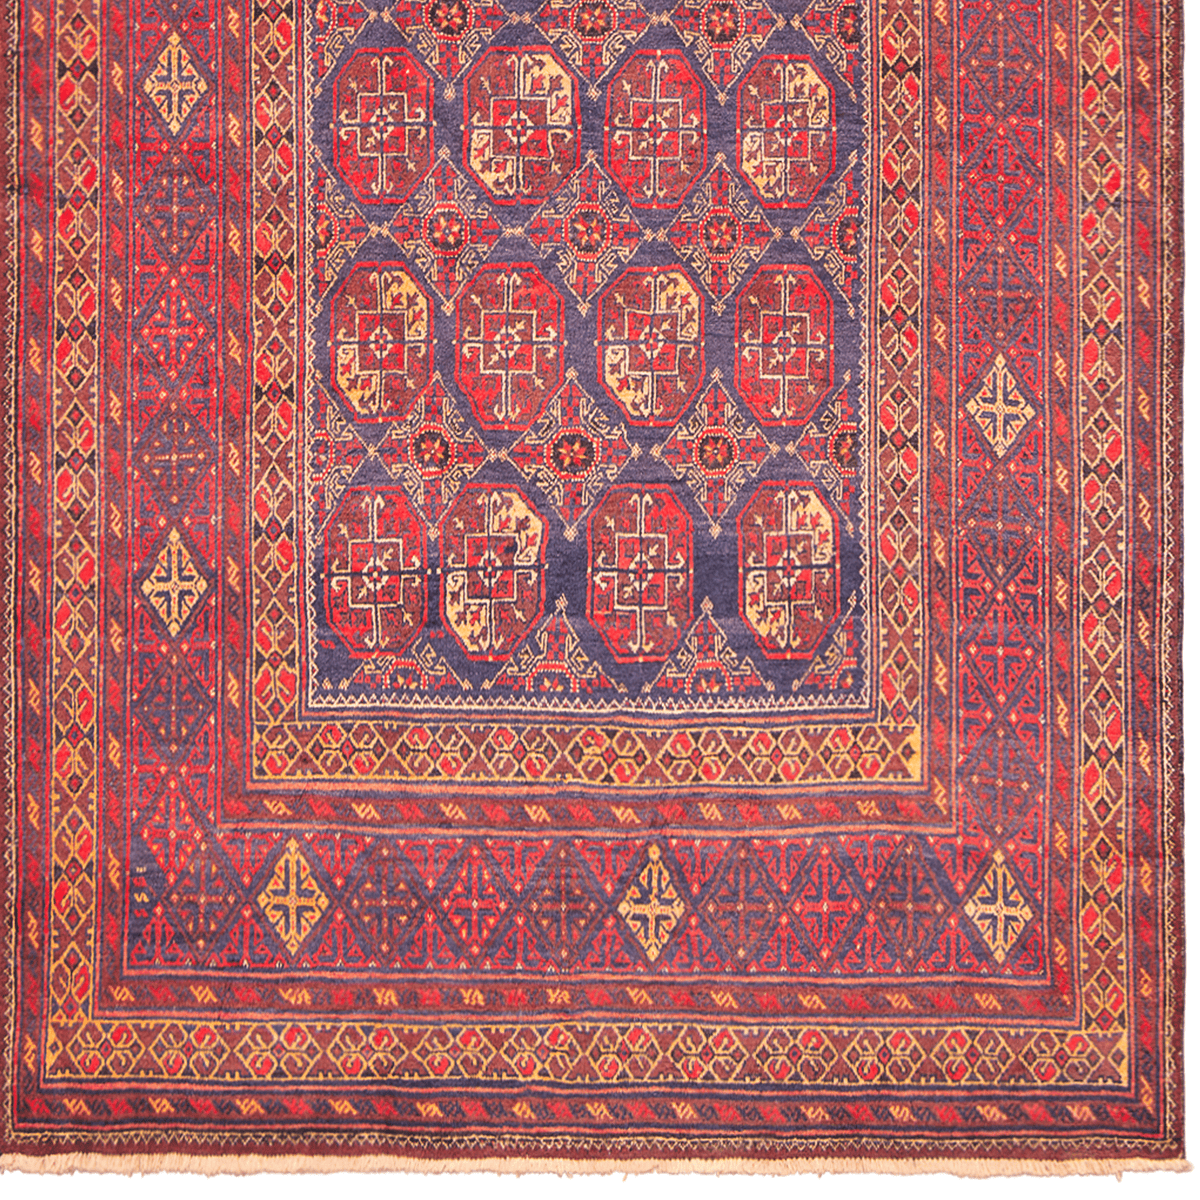 Fine Hand-knotted Baluchi Tribal Wool Rug 216cm x 383cm